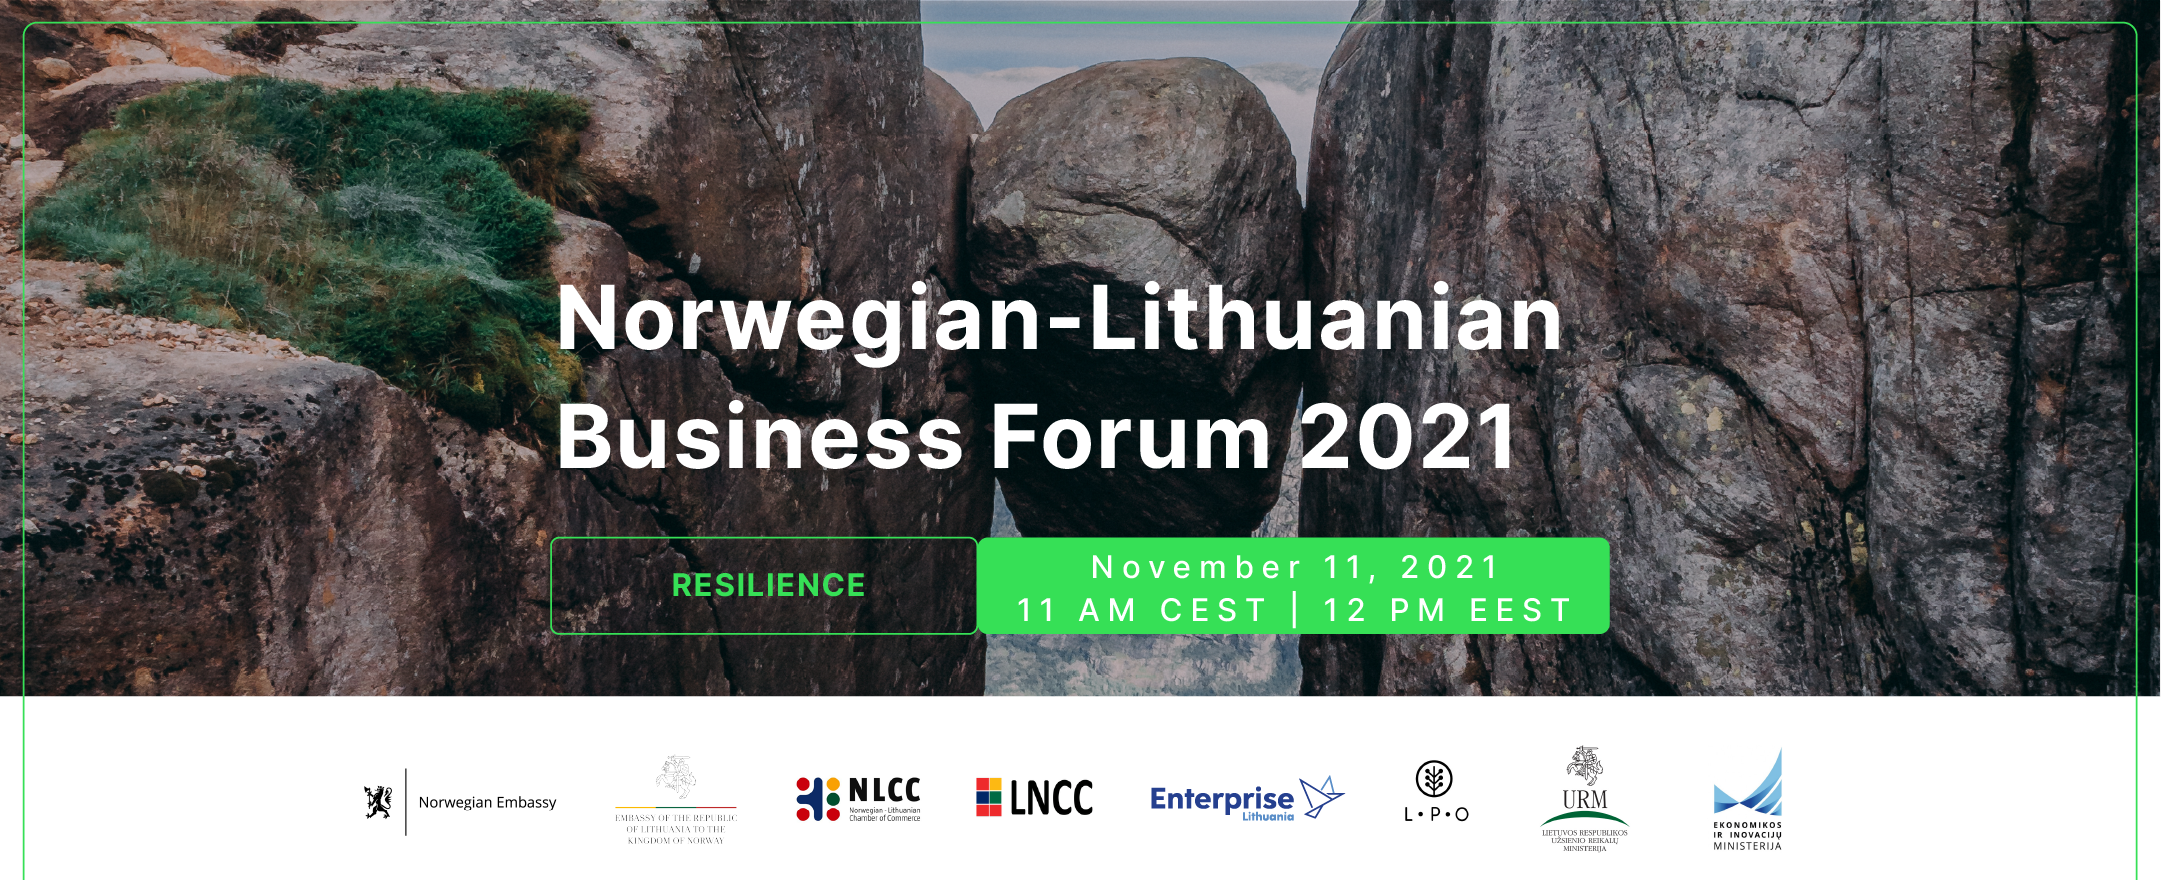 Norwegian-Lithuanian Business Forum 2021